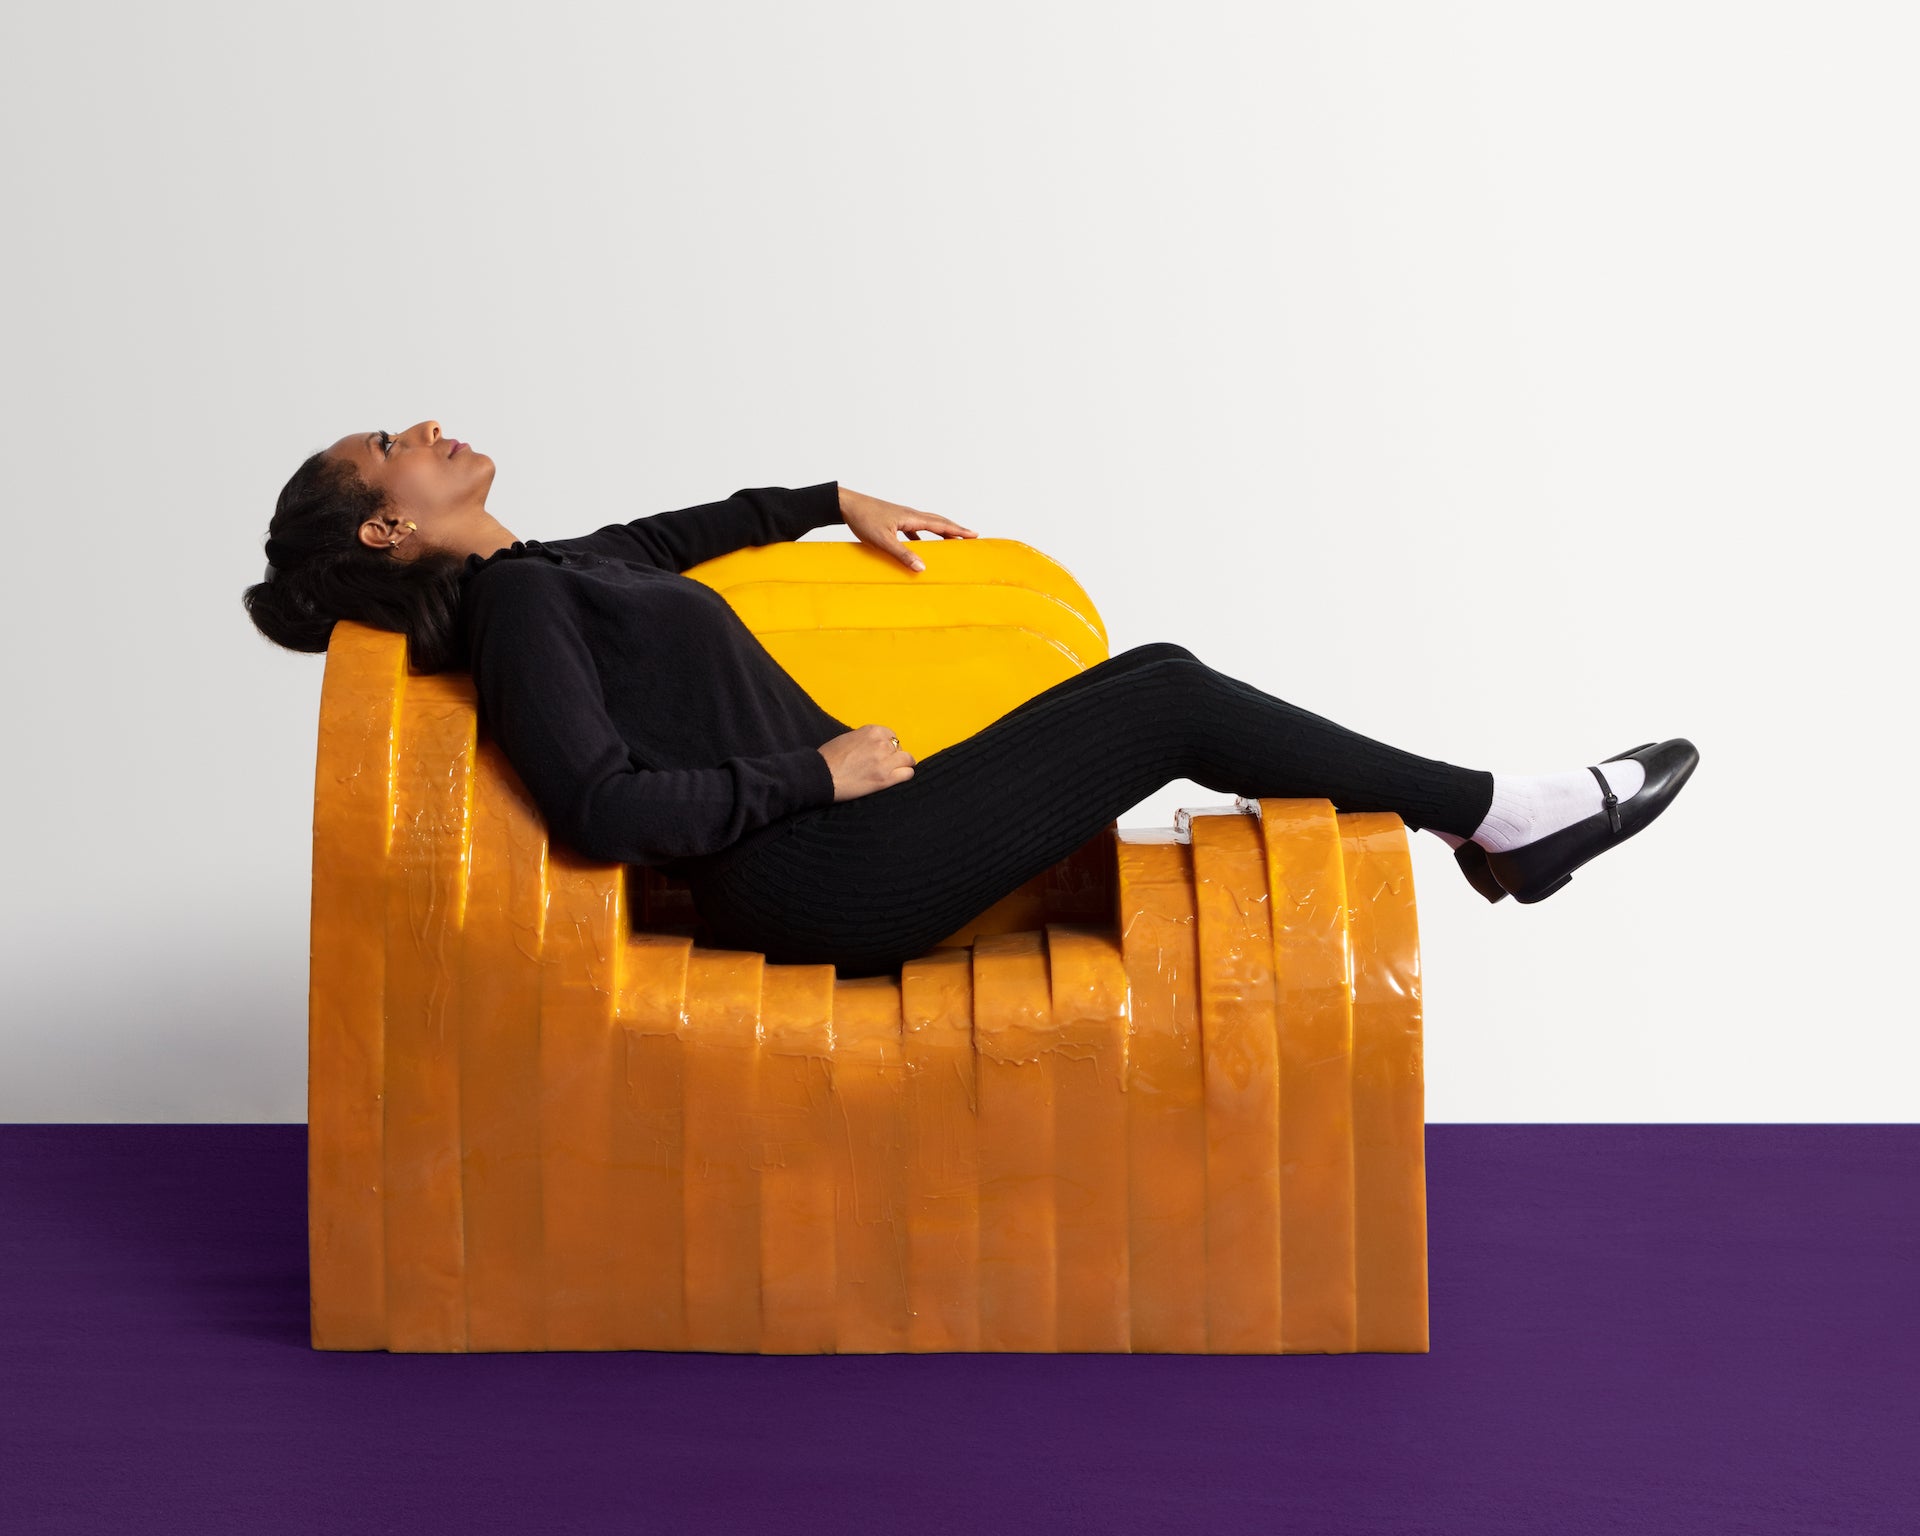 Luam Melake's Foam Furniture Wants to Bring People Back Together